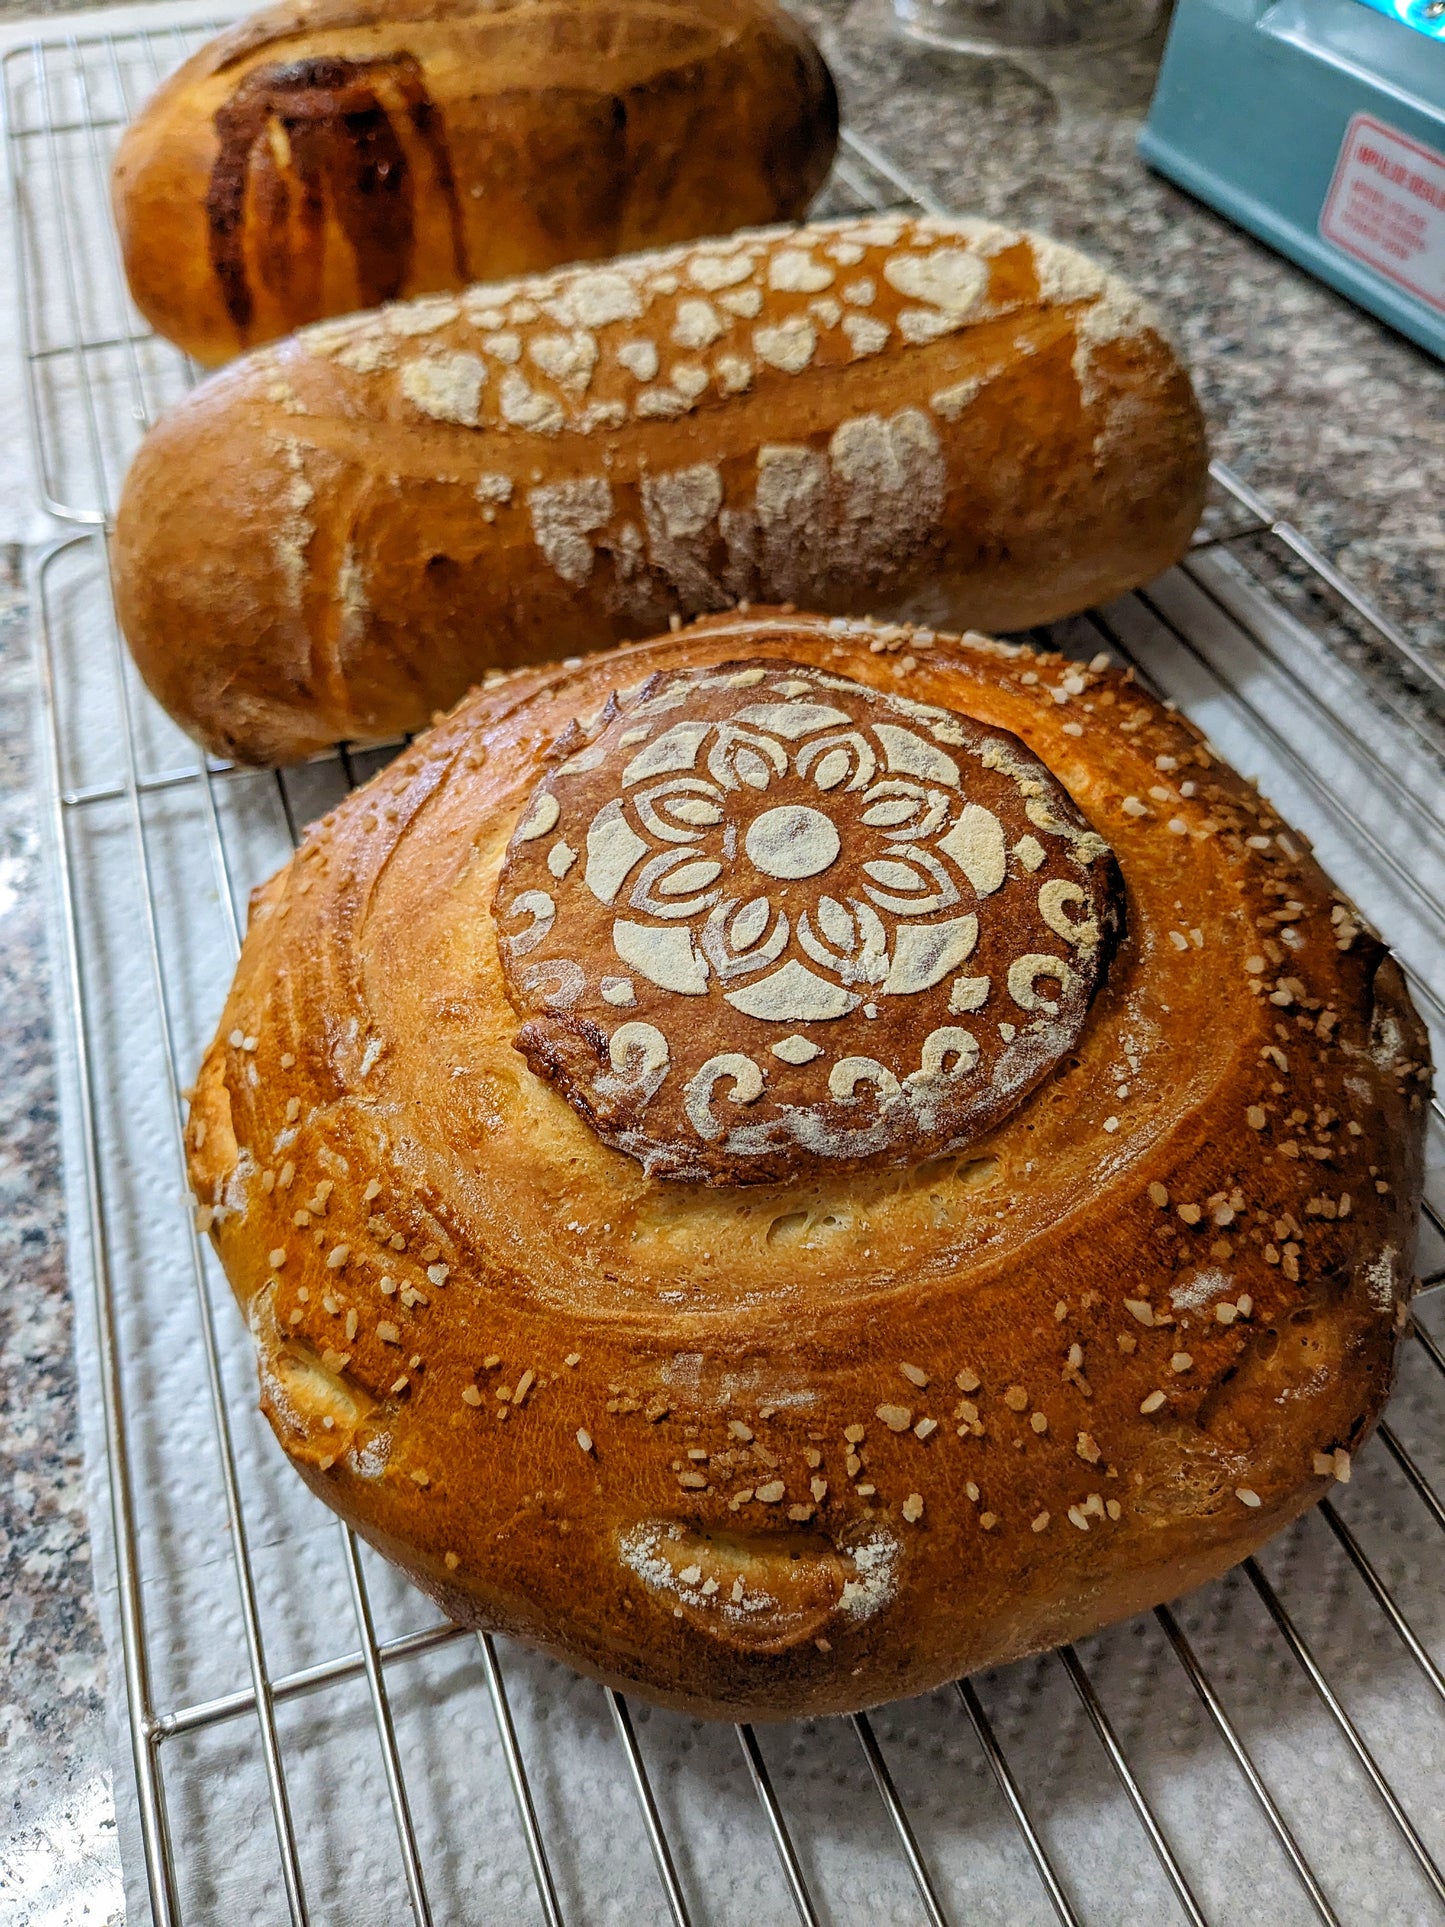 Bread loaves (standard flavors)